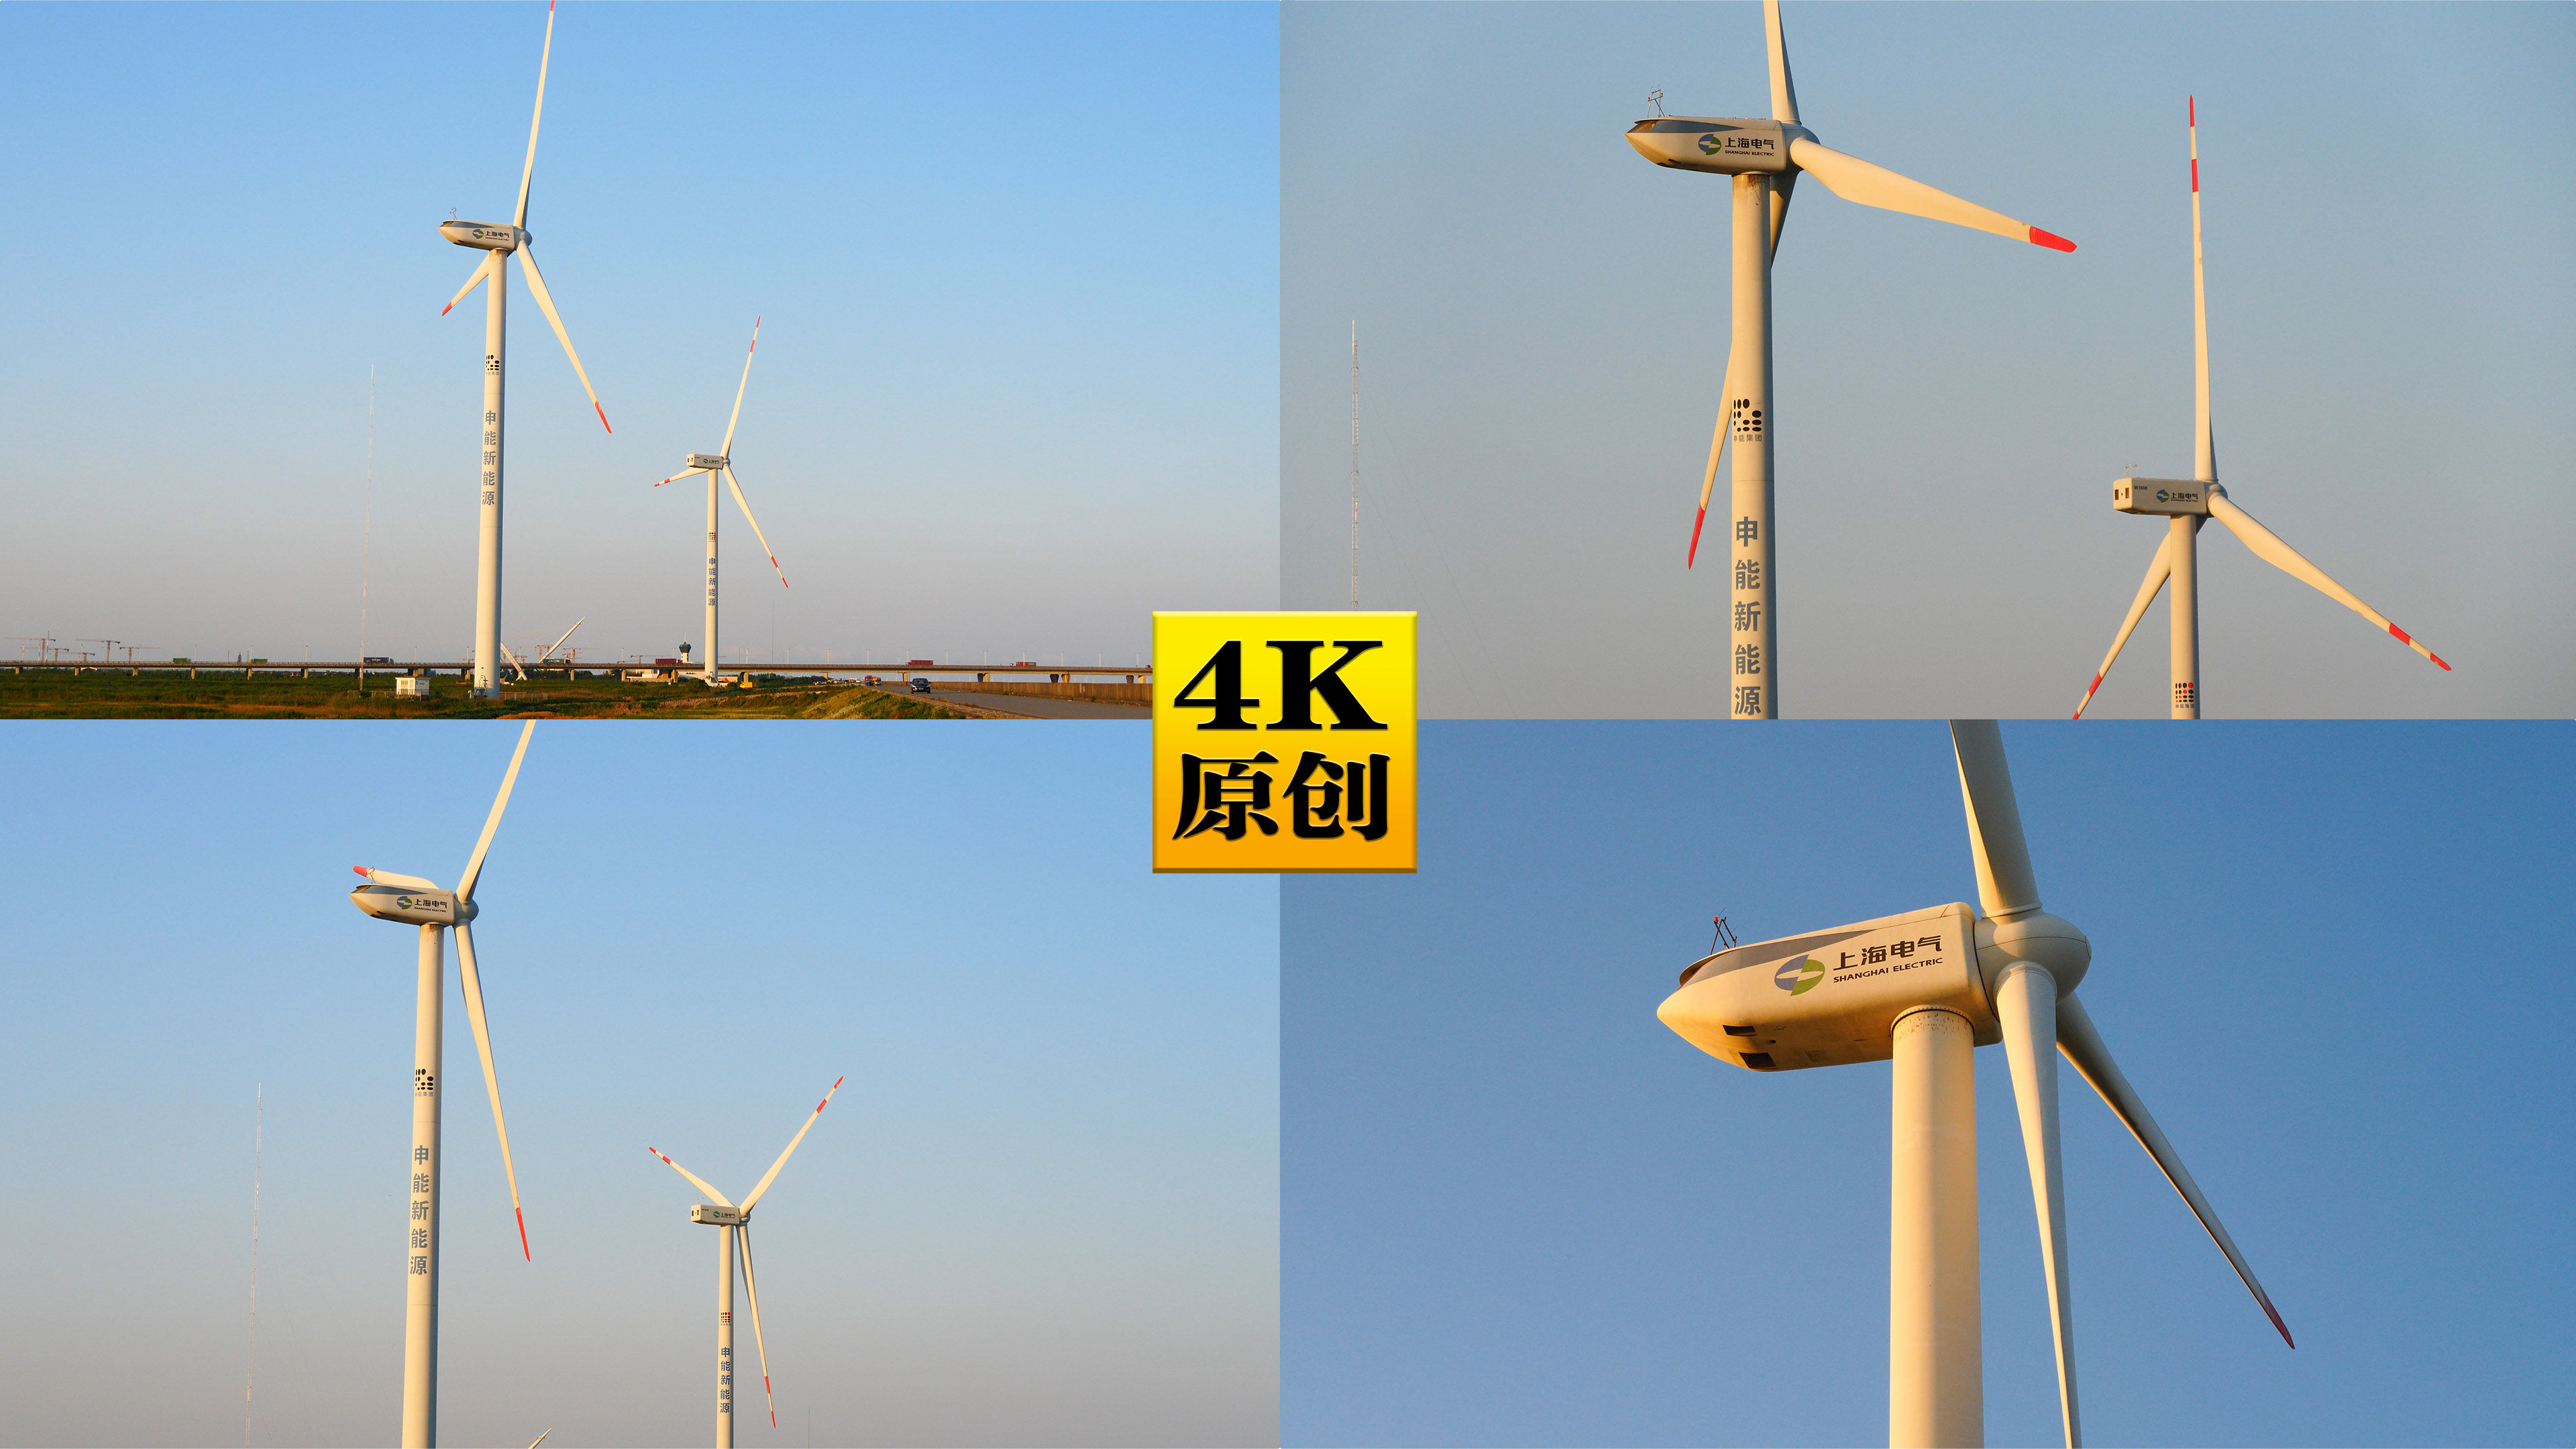 4k原创)风车风力发电风电海岸节能环保